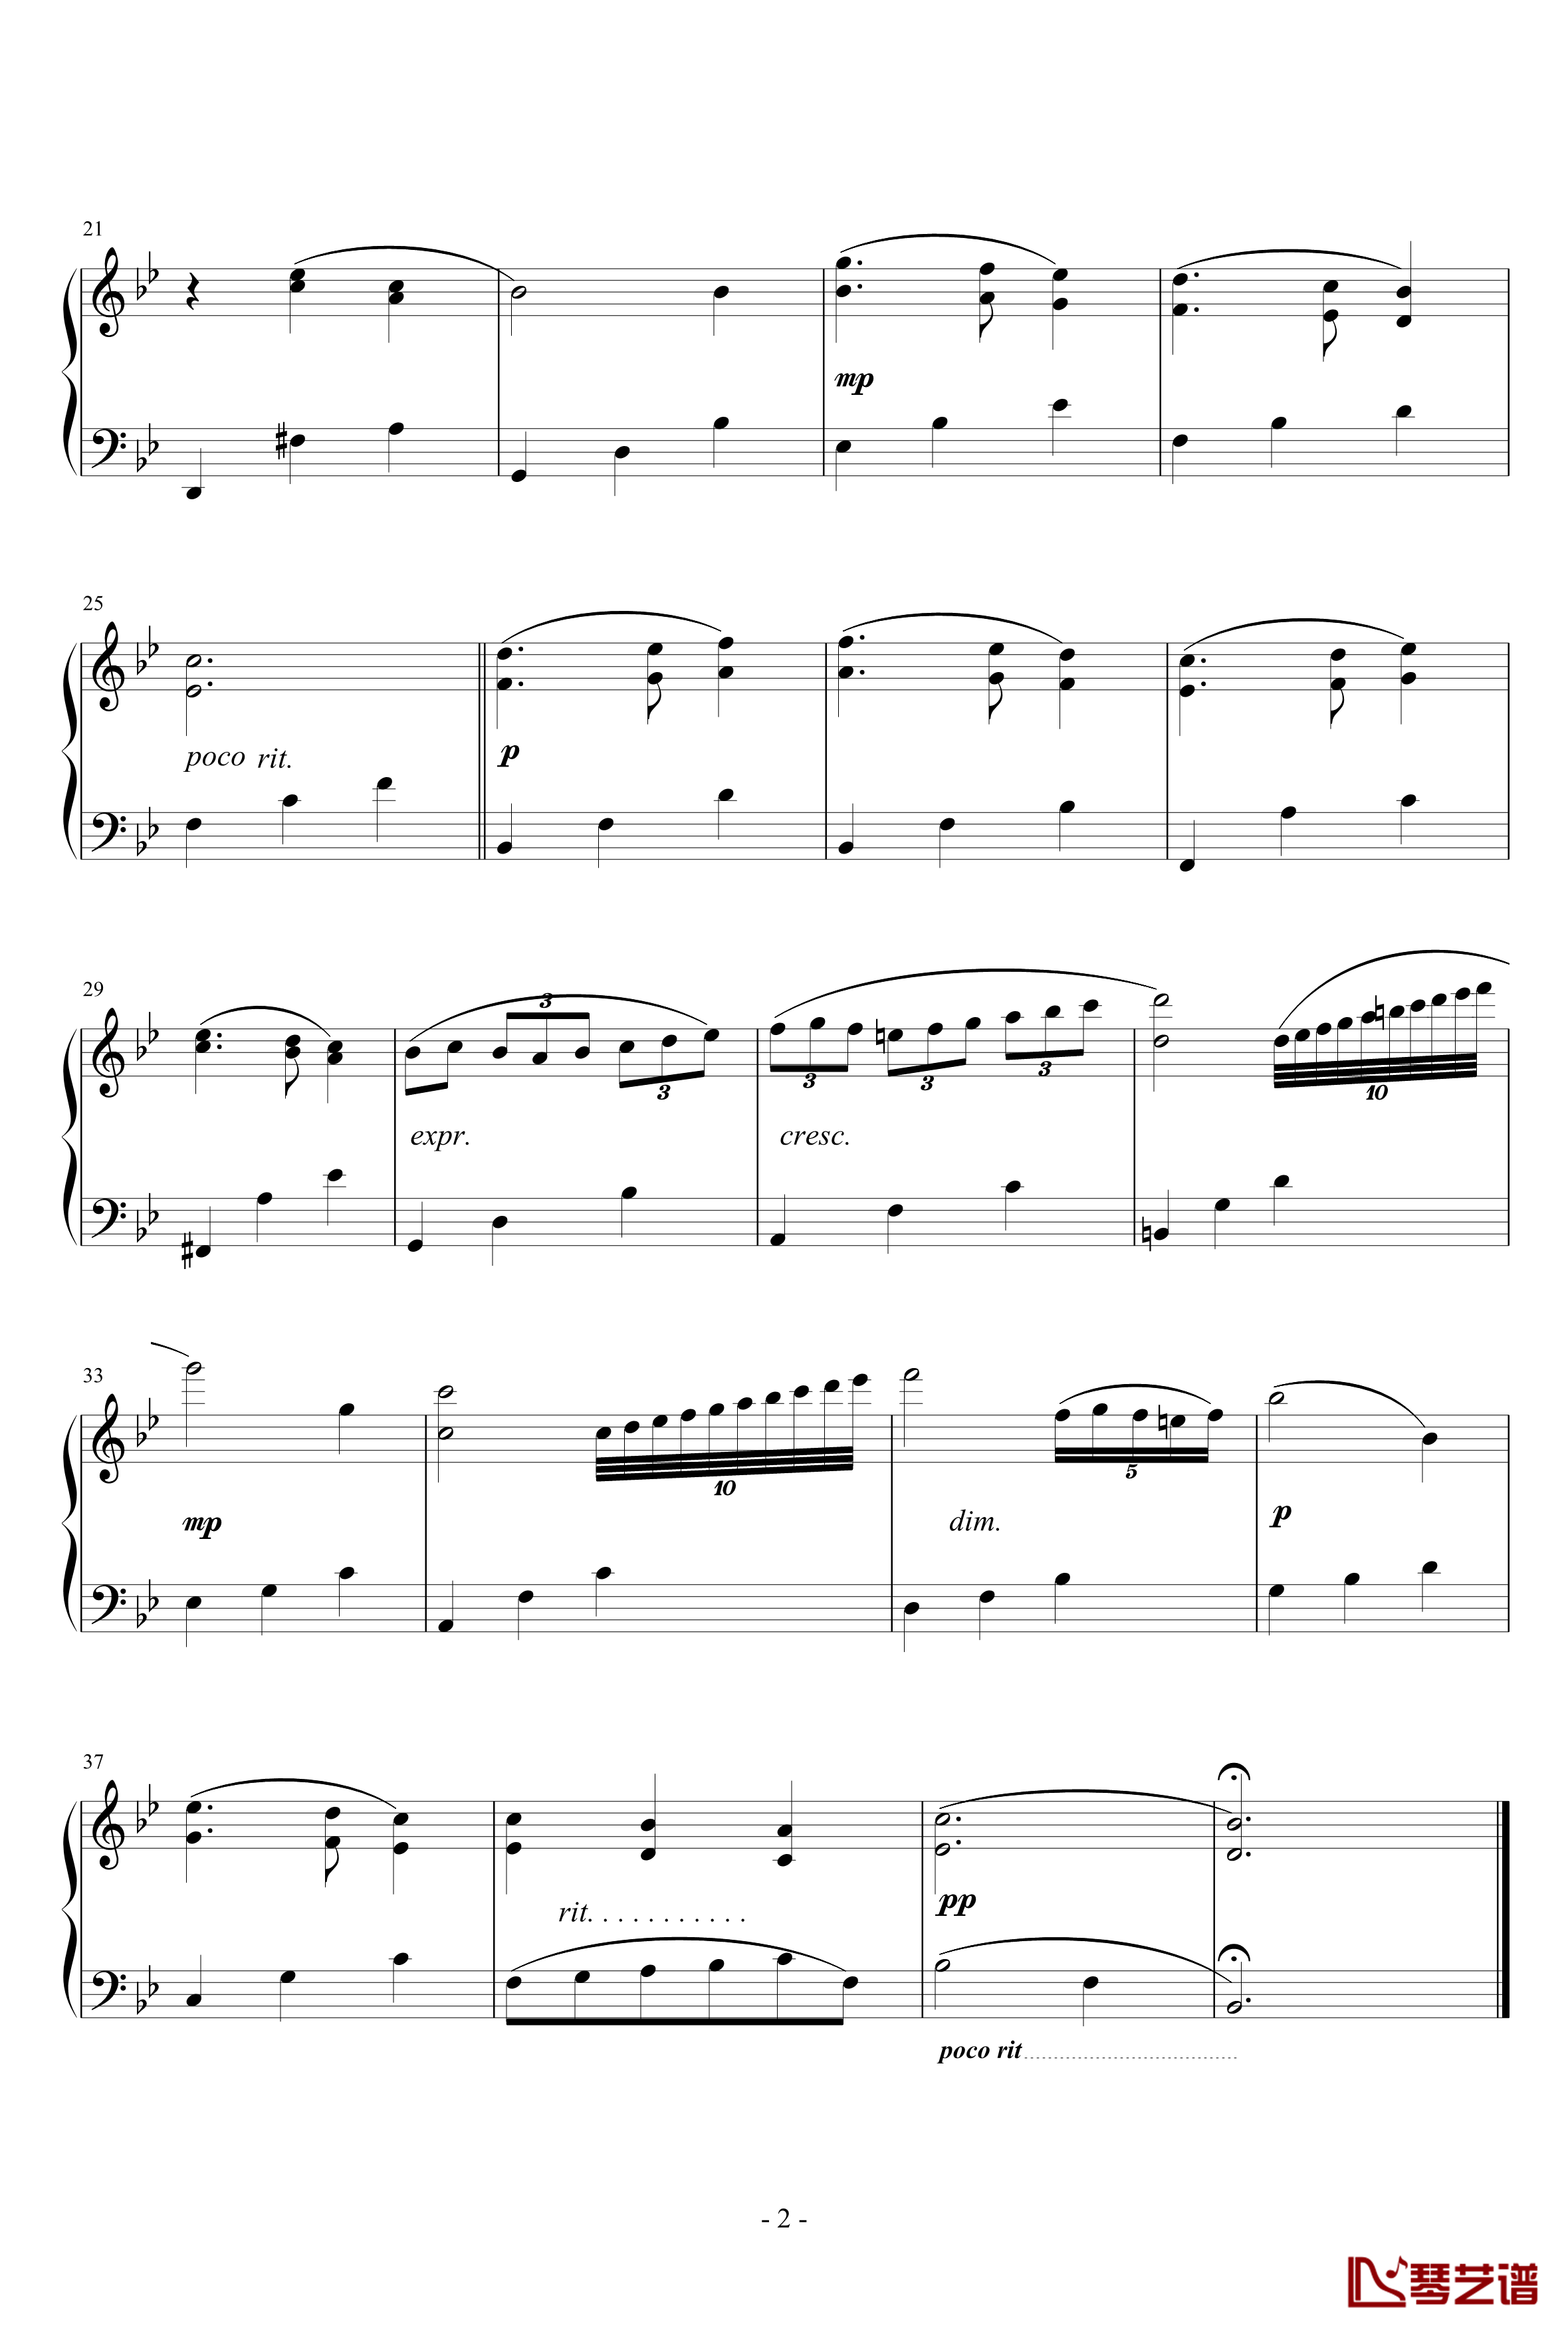 A Mozart Reincarnated钢琴谱-完美原版-1900-海上钢琴师